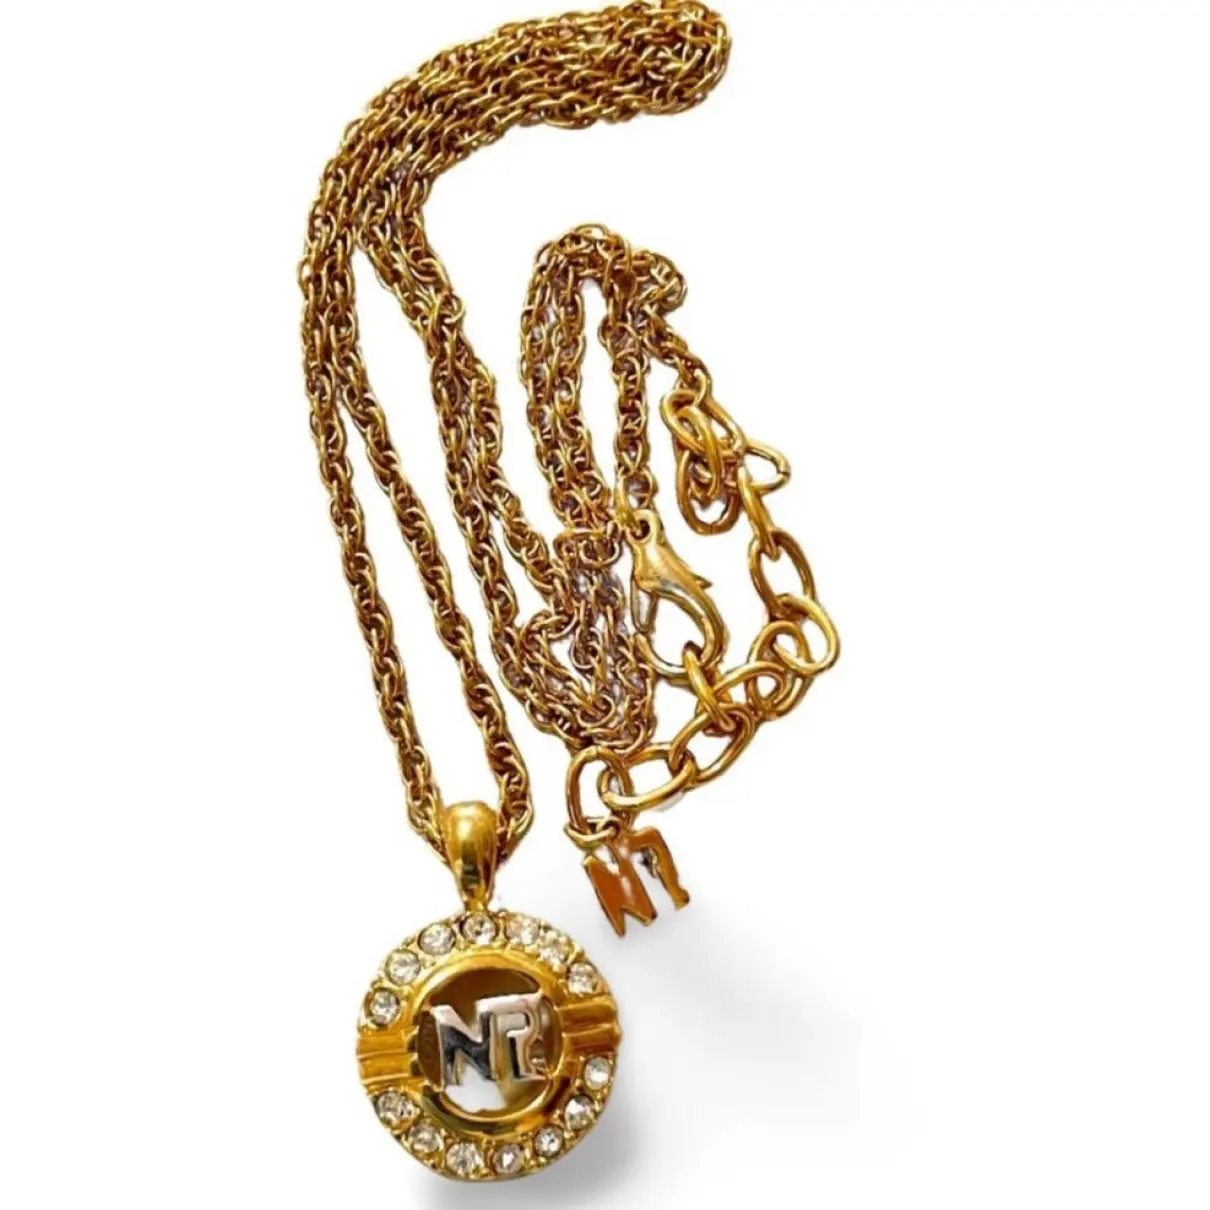 Buy Nina Ricci Necklace online - Vintage